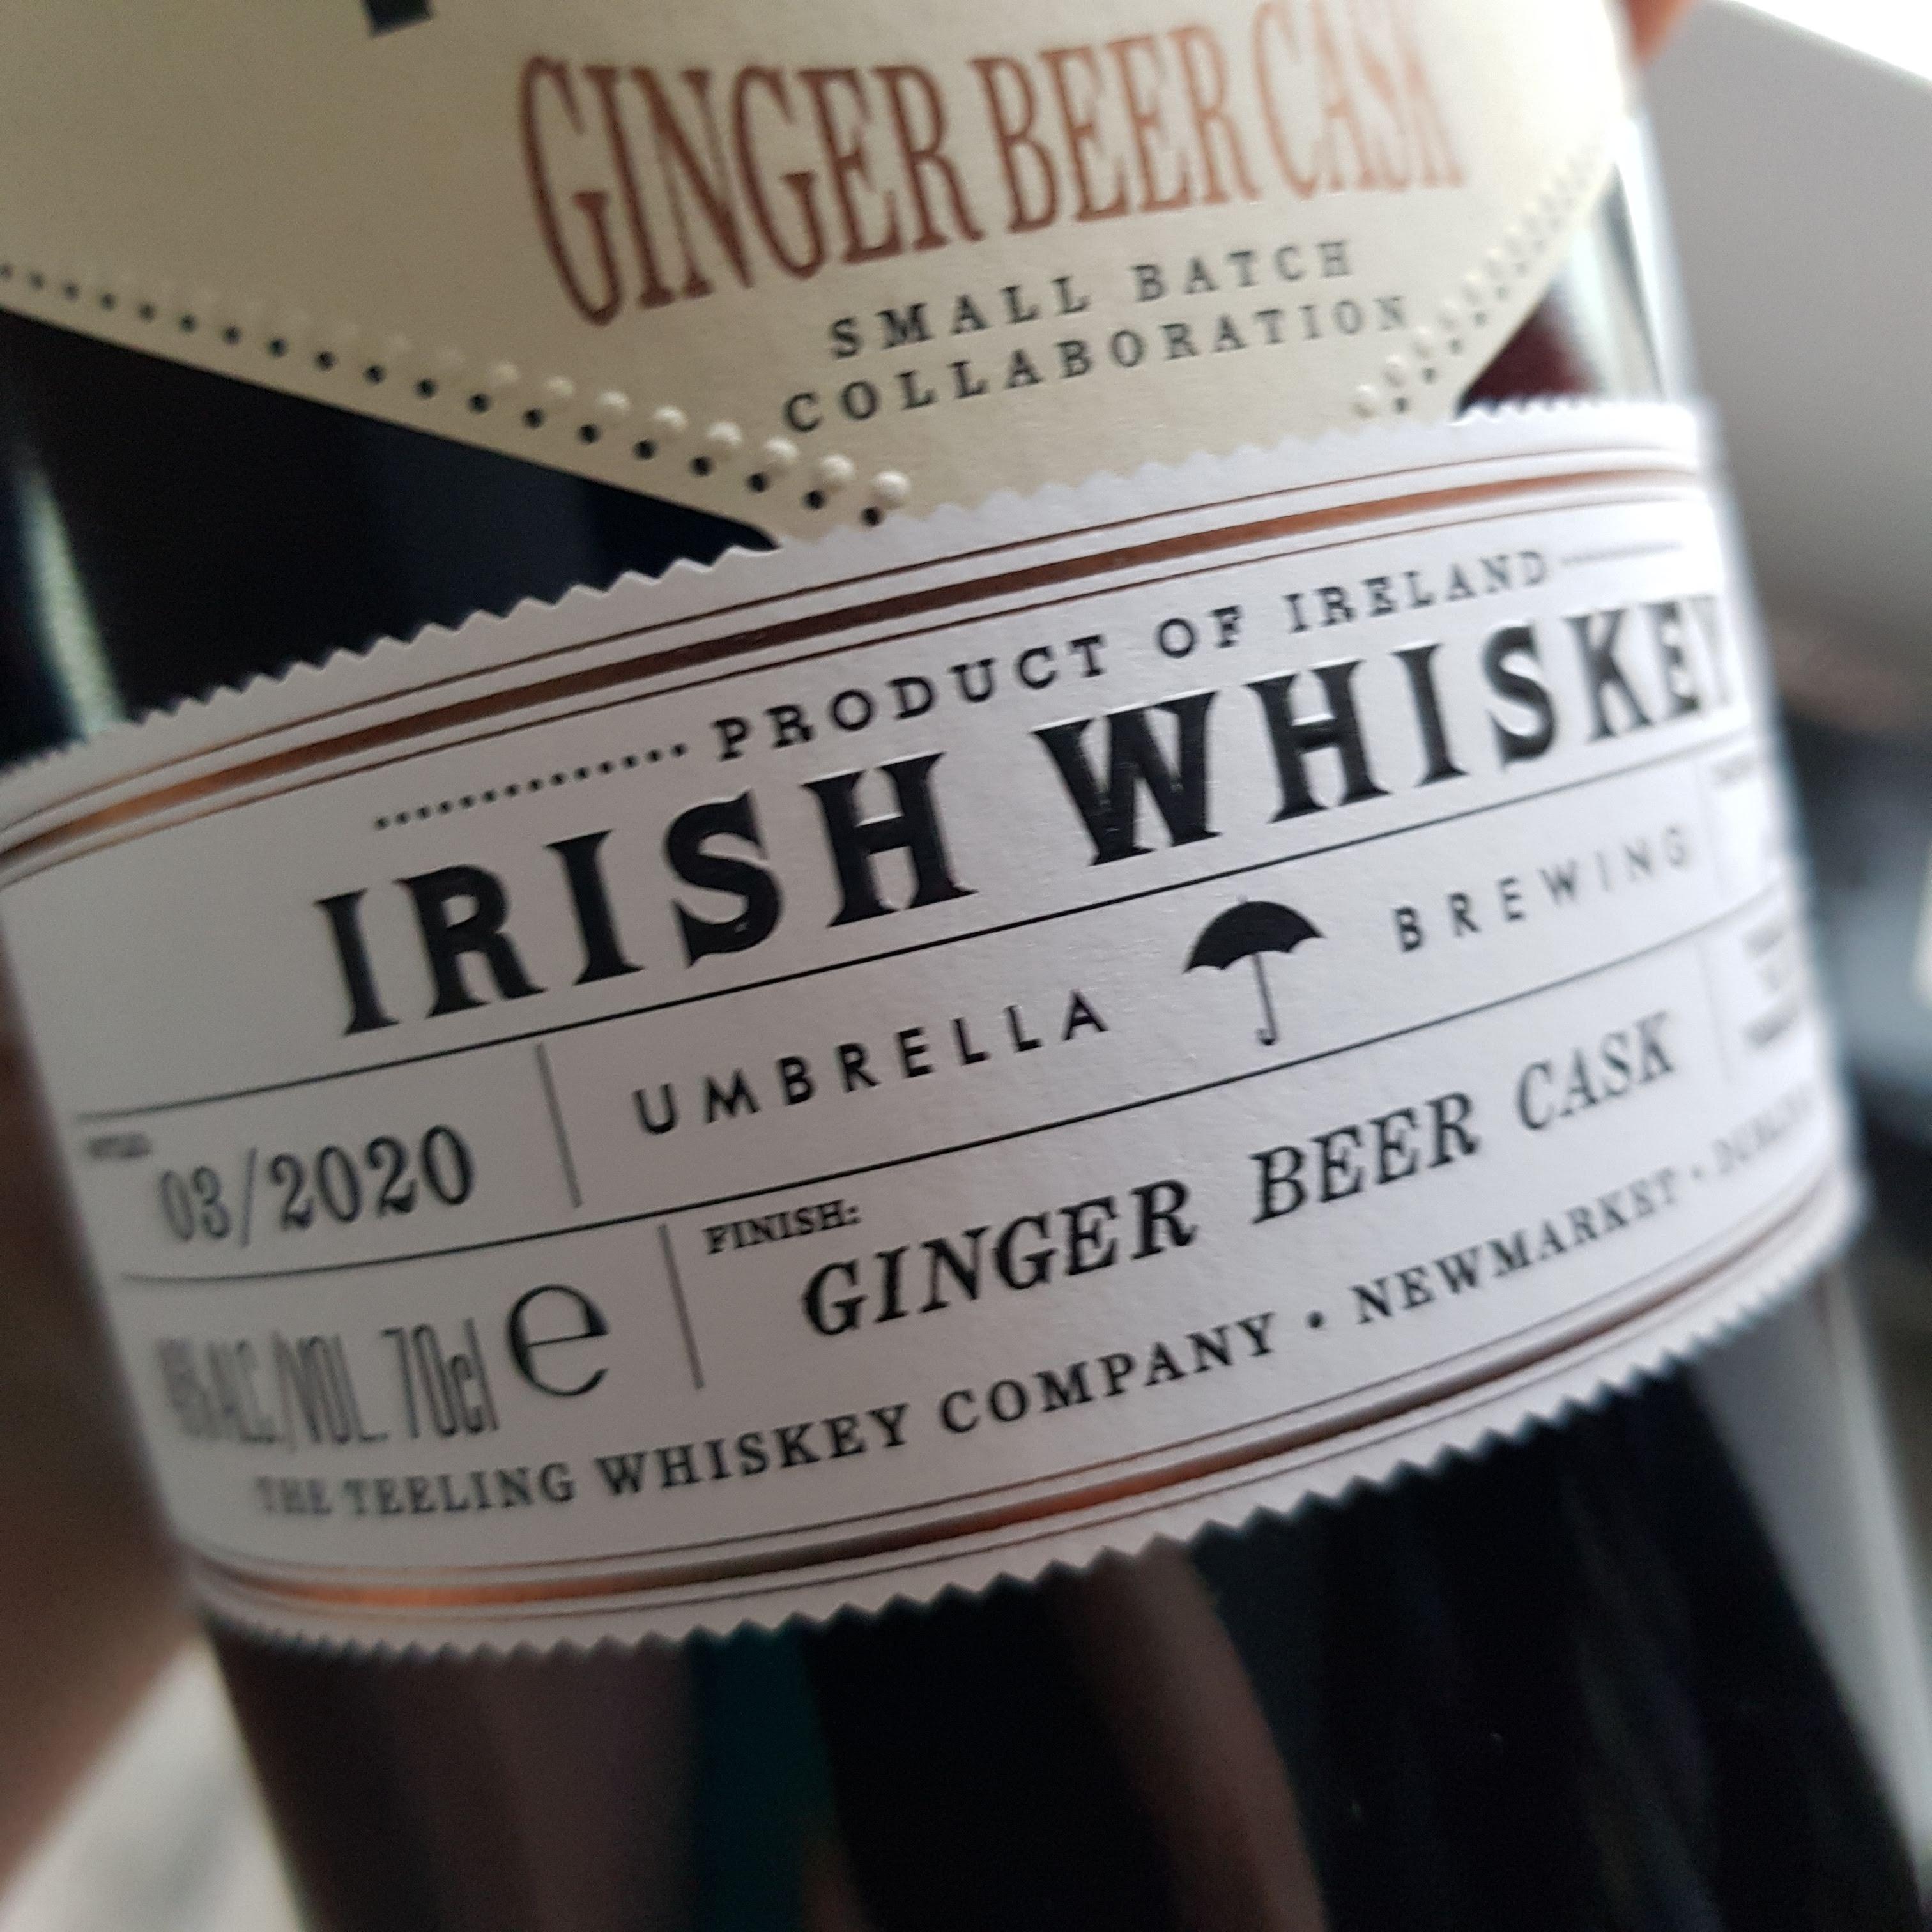 Teeling Ginger Beer Cask Umbrella Brewing release 1st ginger beer cask Irish whiskey